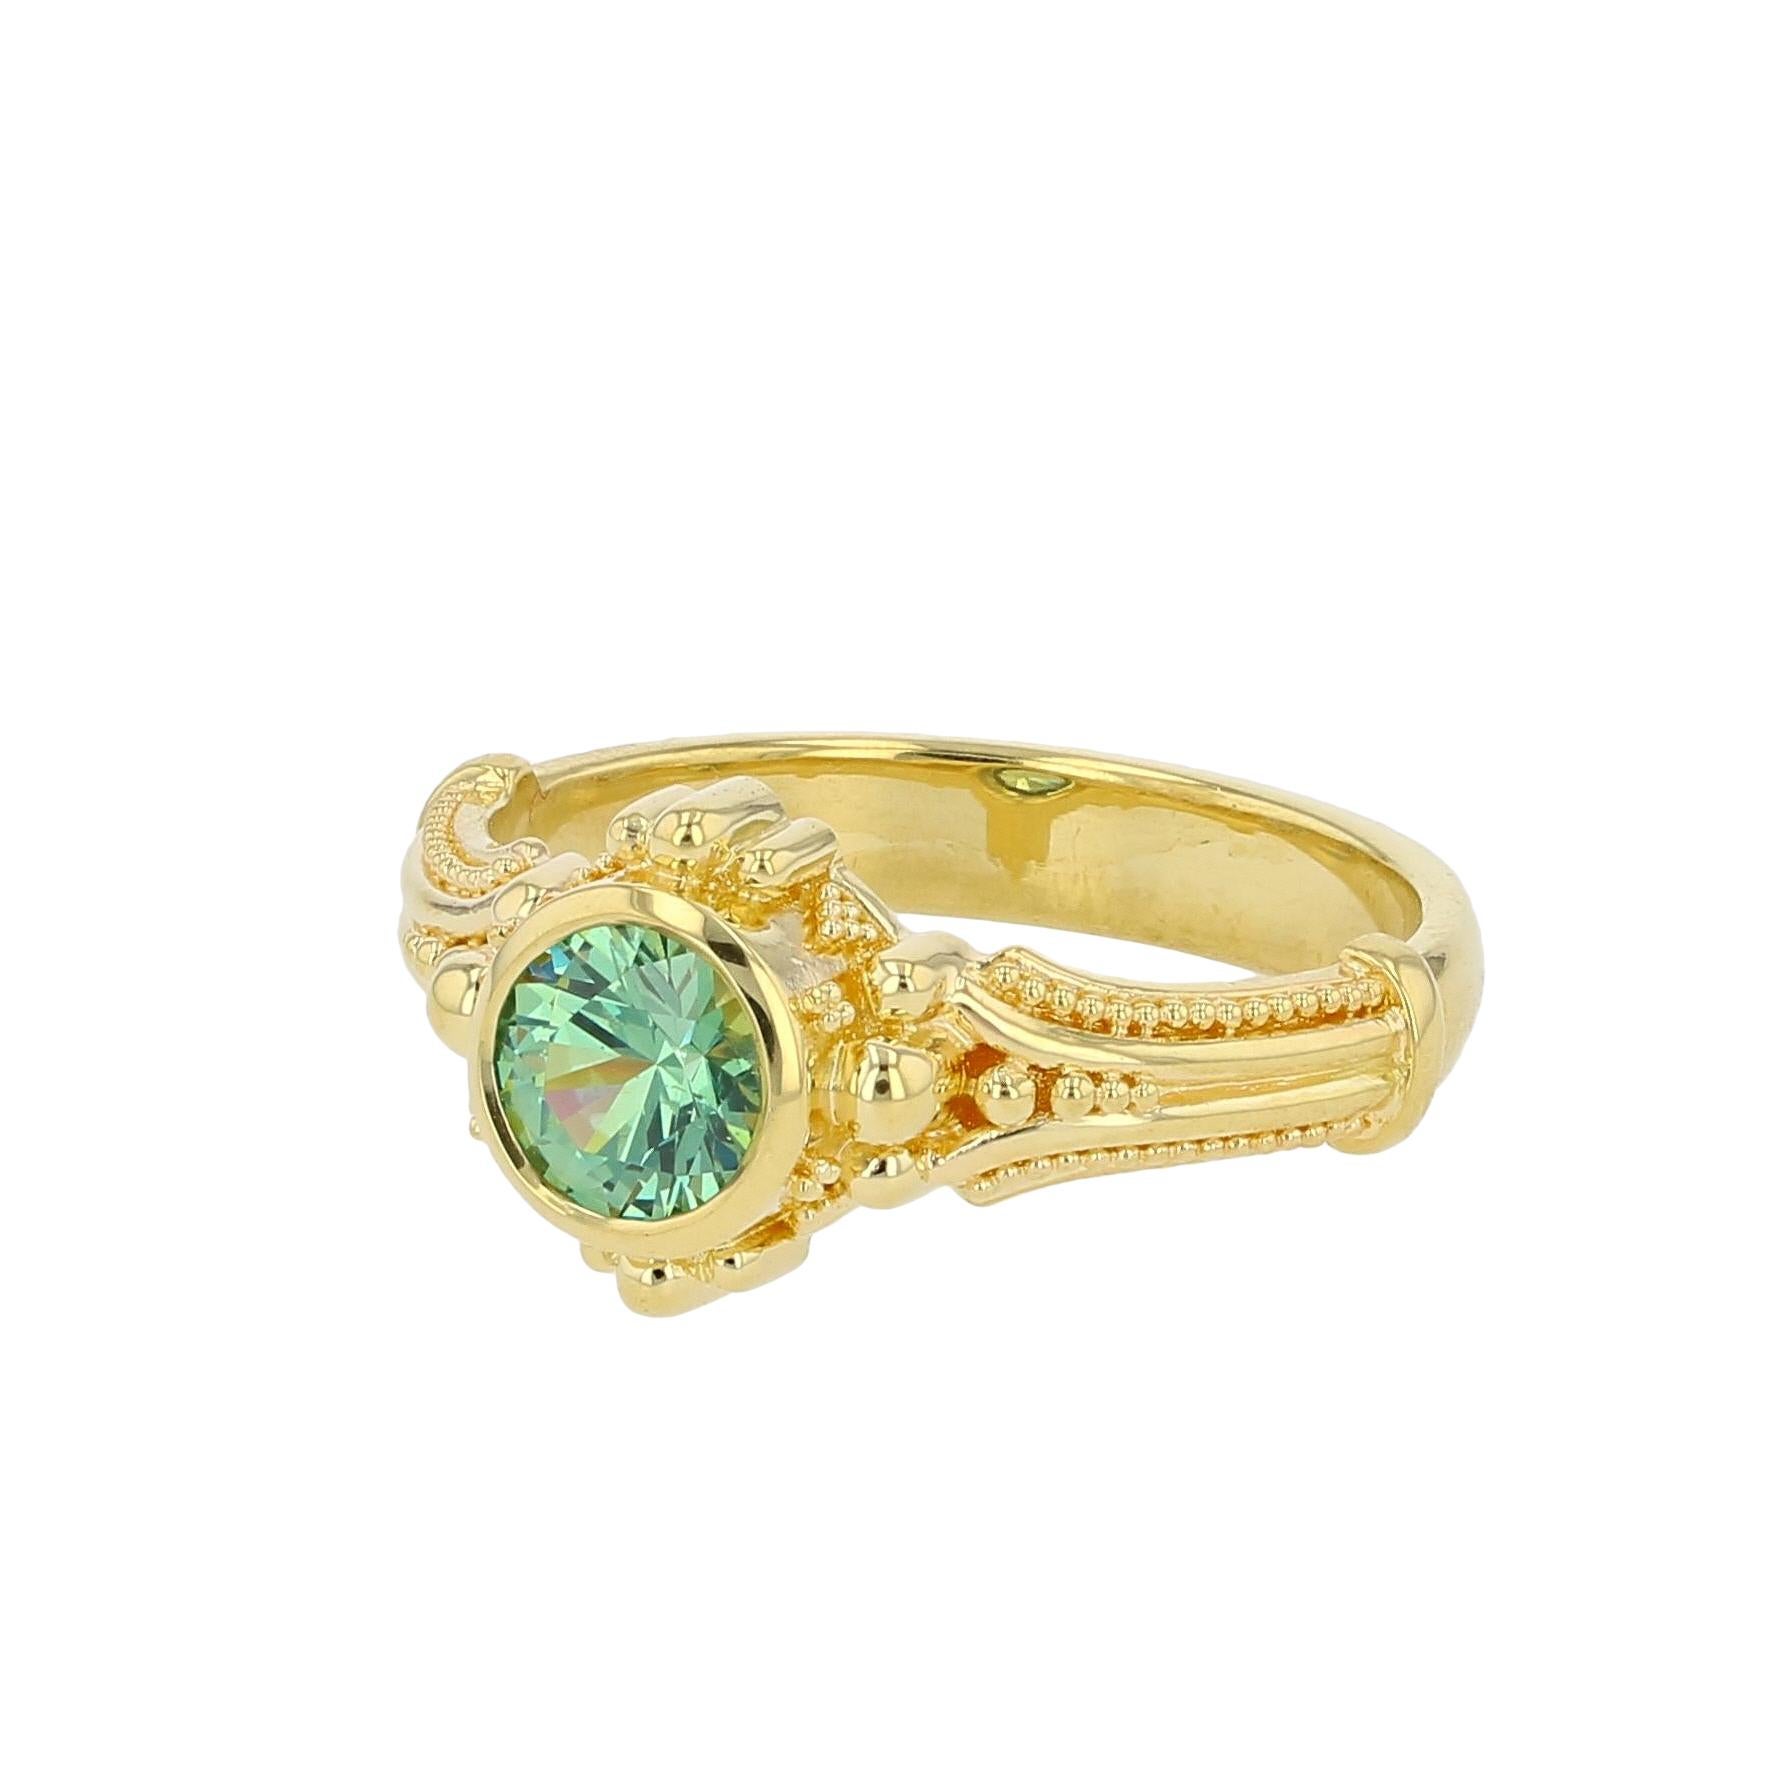 Women's or Men's Kent Raible 18 Karat Gold Green Garnet Solitaire Ring with Fine Granulation